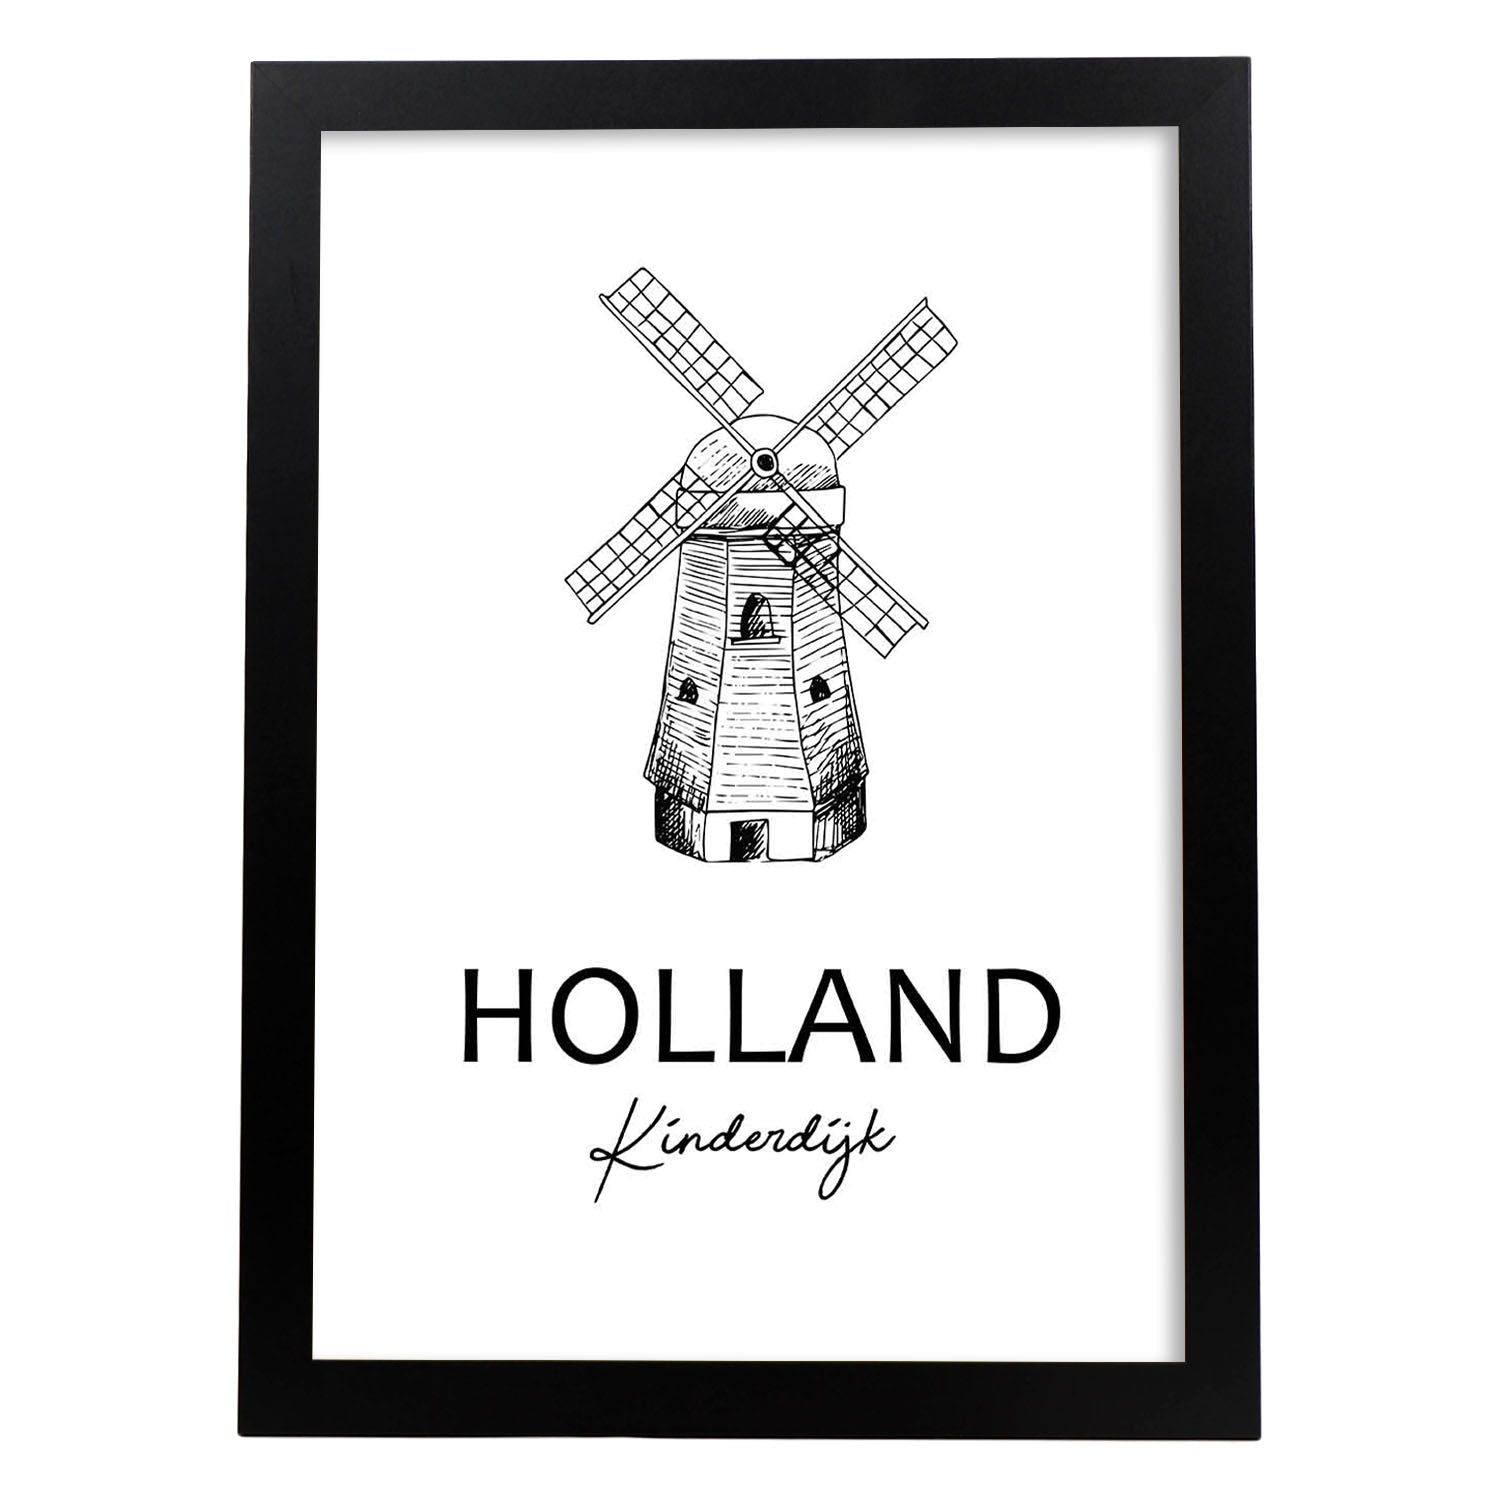 Poster de Holanda - Kinderdijk. Láminas con monumentos de ciudades.-Artwork-Nacnic-A4-Marco Negro-Nacnic Estudio SL